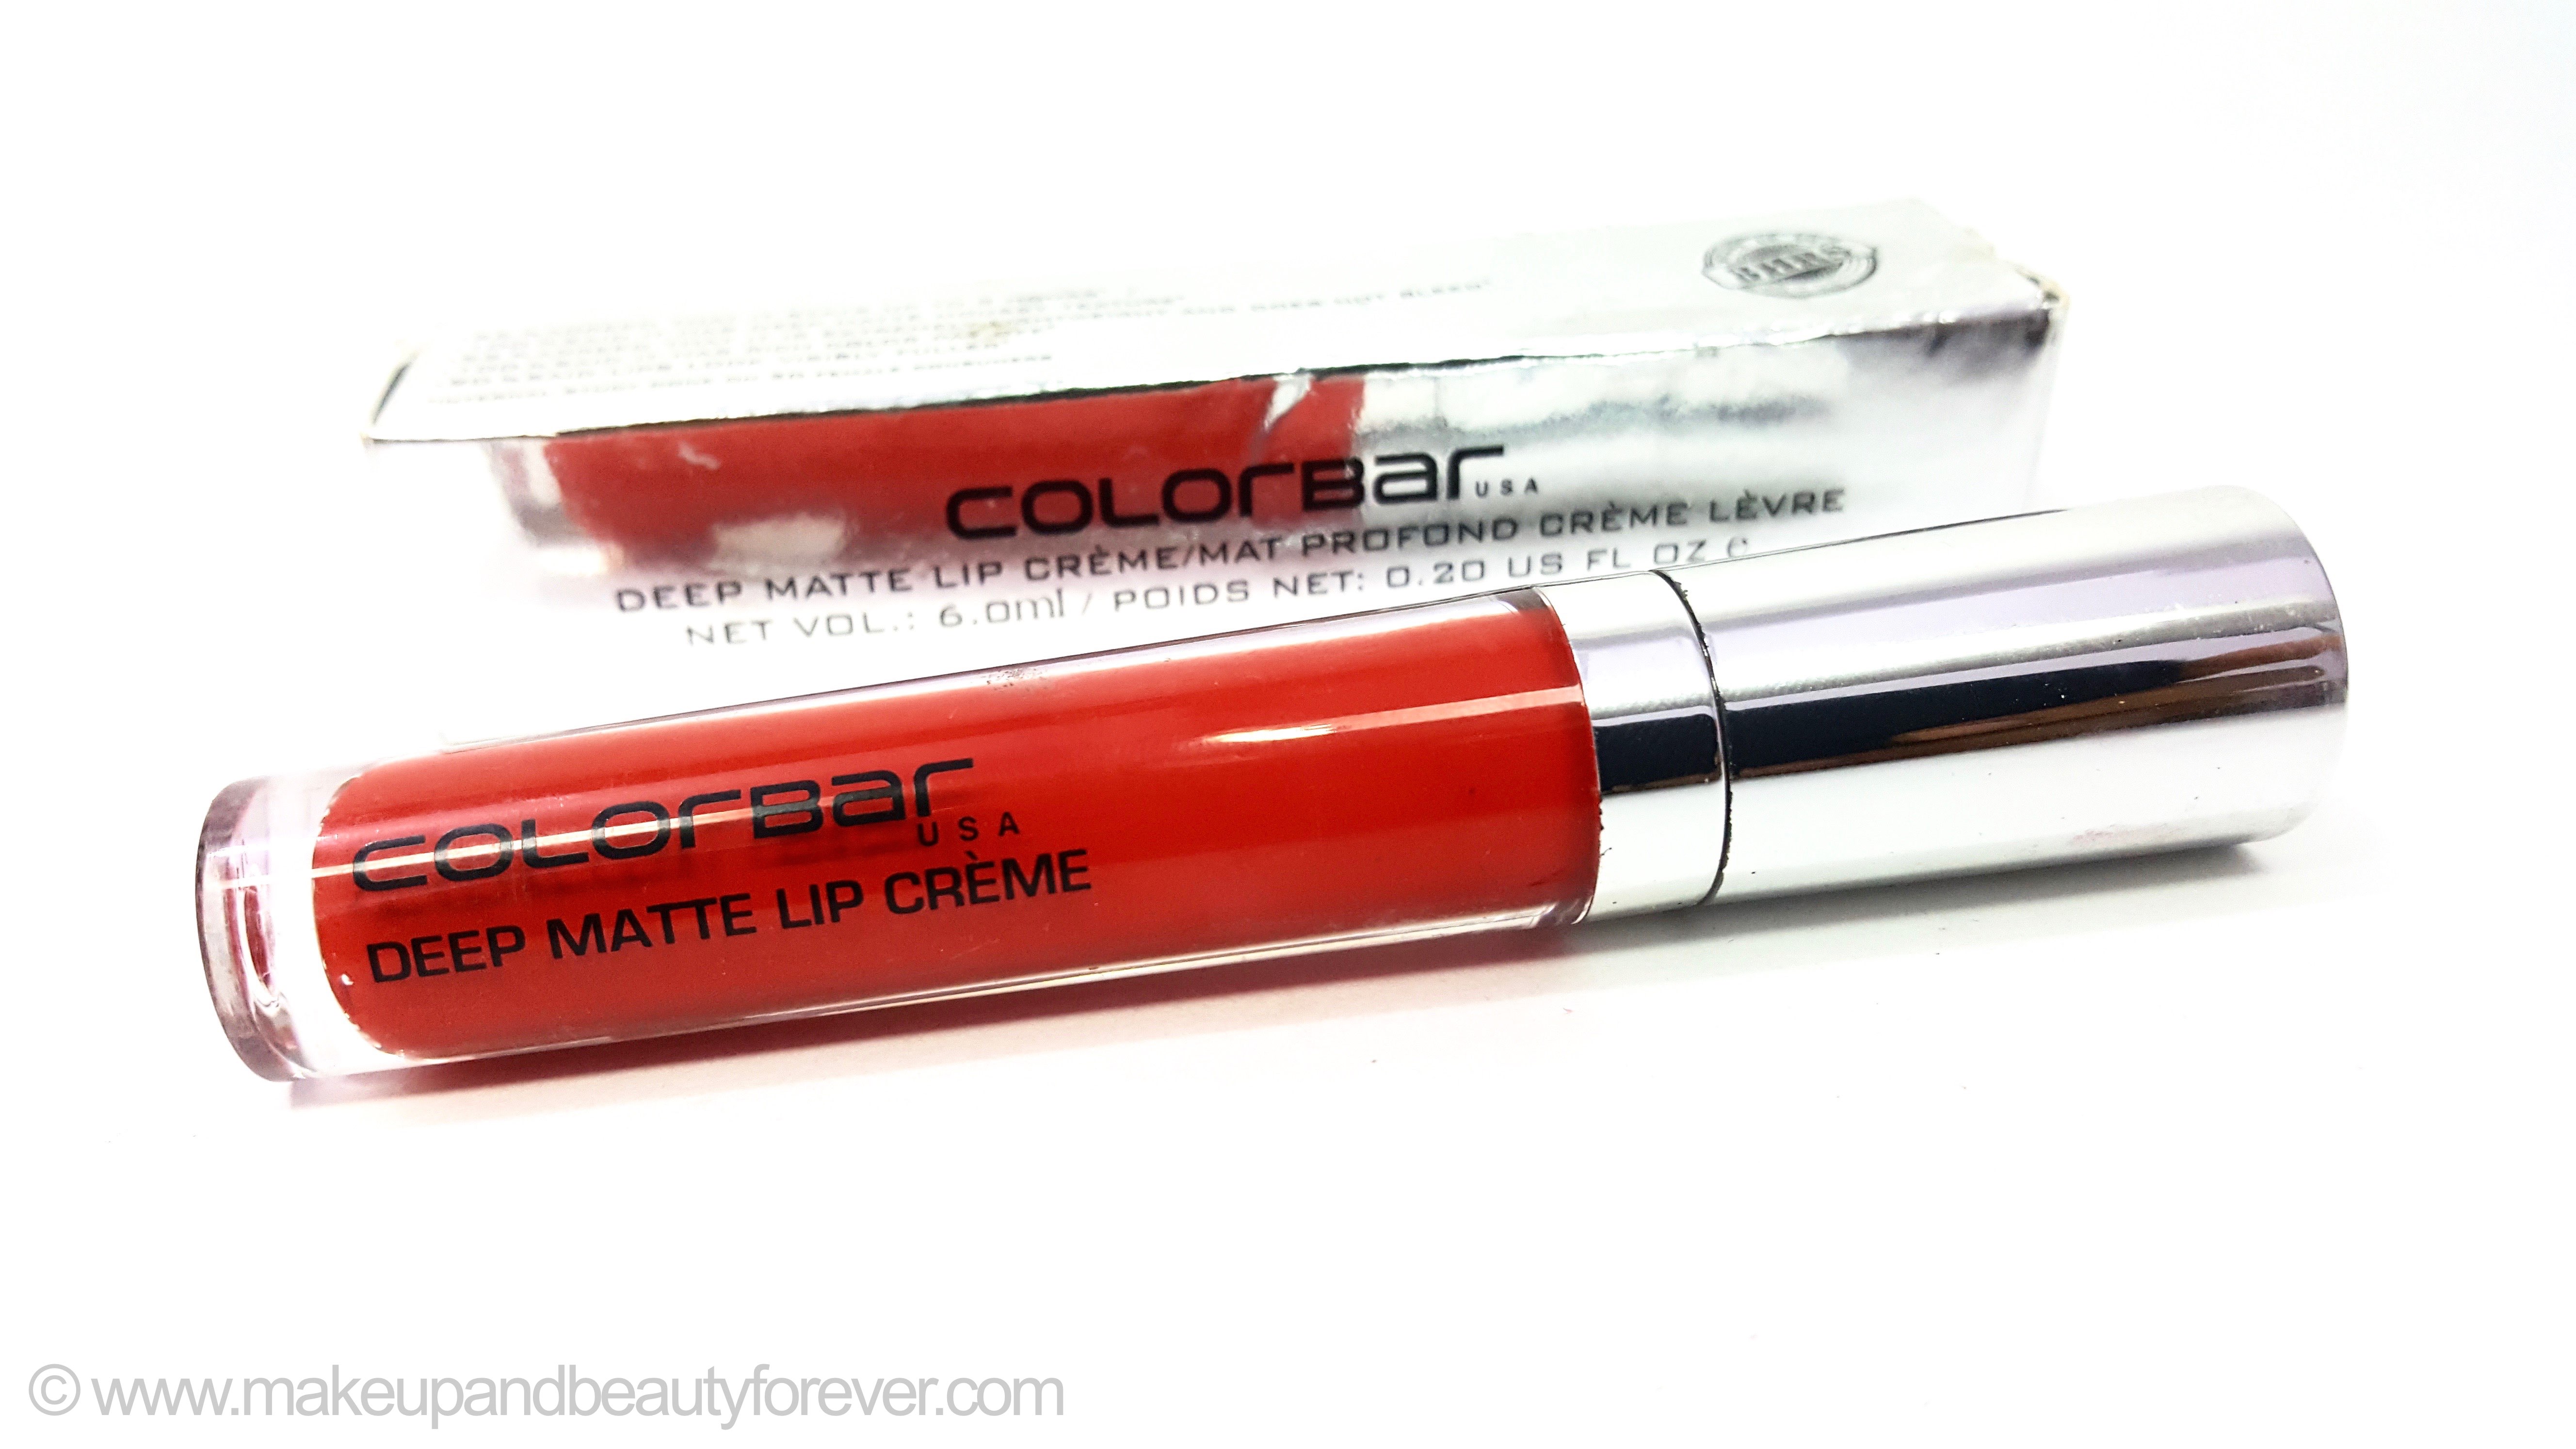 Colorbar Deep Matte Lip Crème Deep Red 001 Review orange red bridal shade lipstick